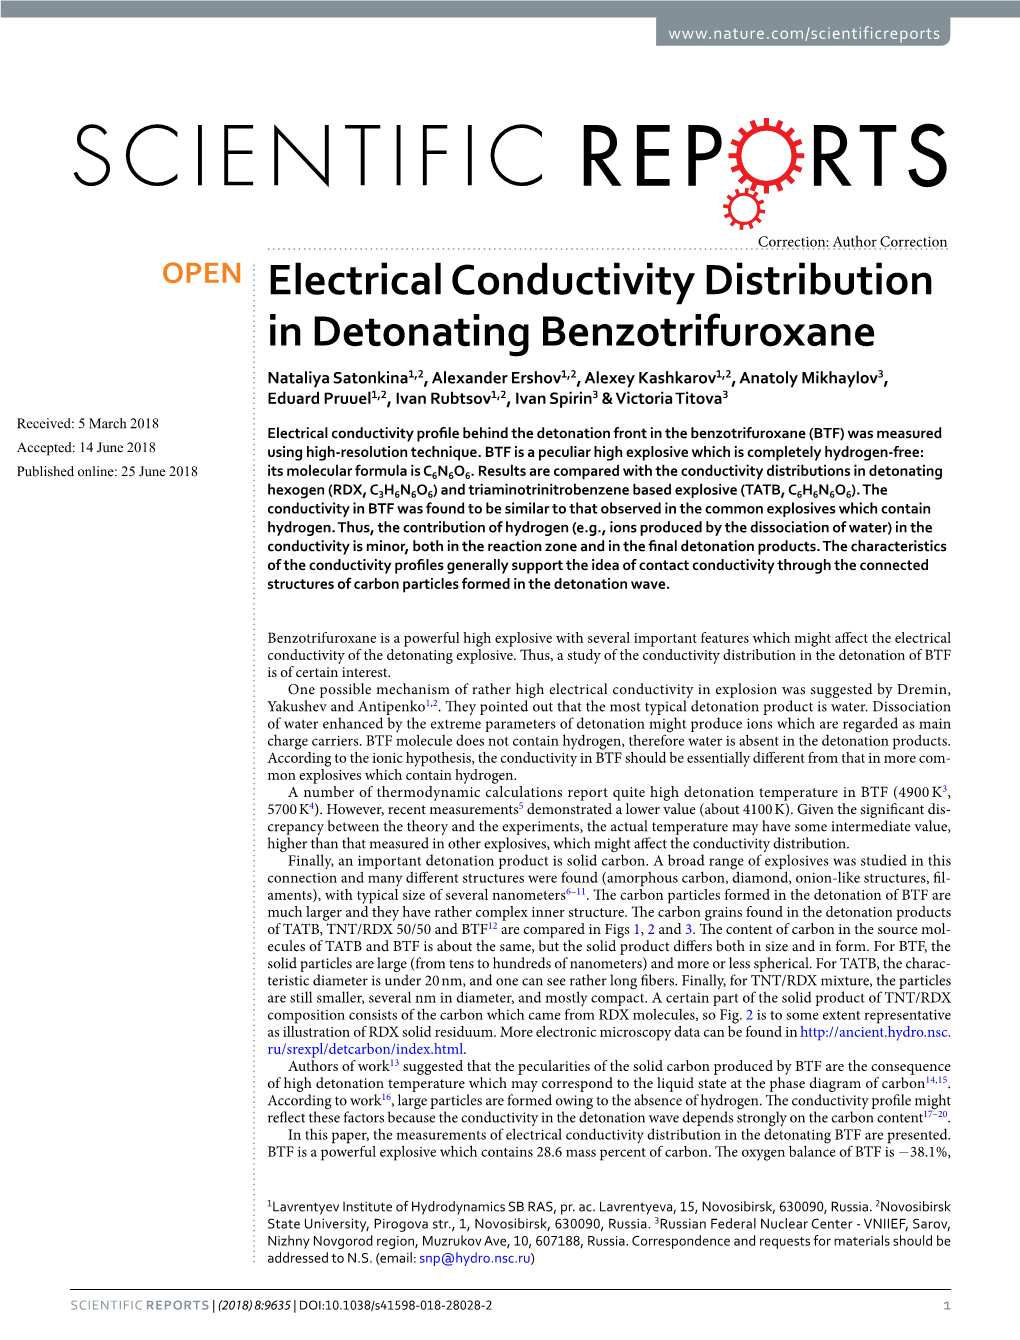 Electrical Conductivity Distribution in Detonating Benzotrifuroxane